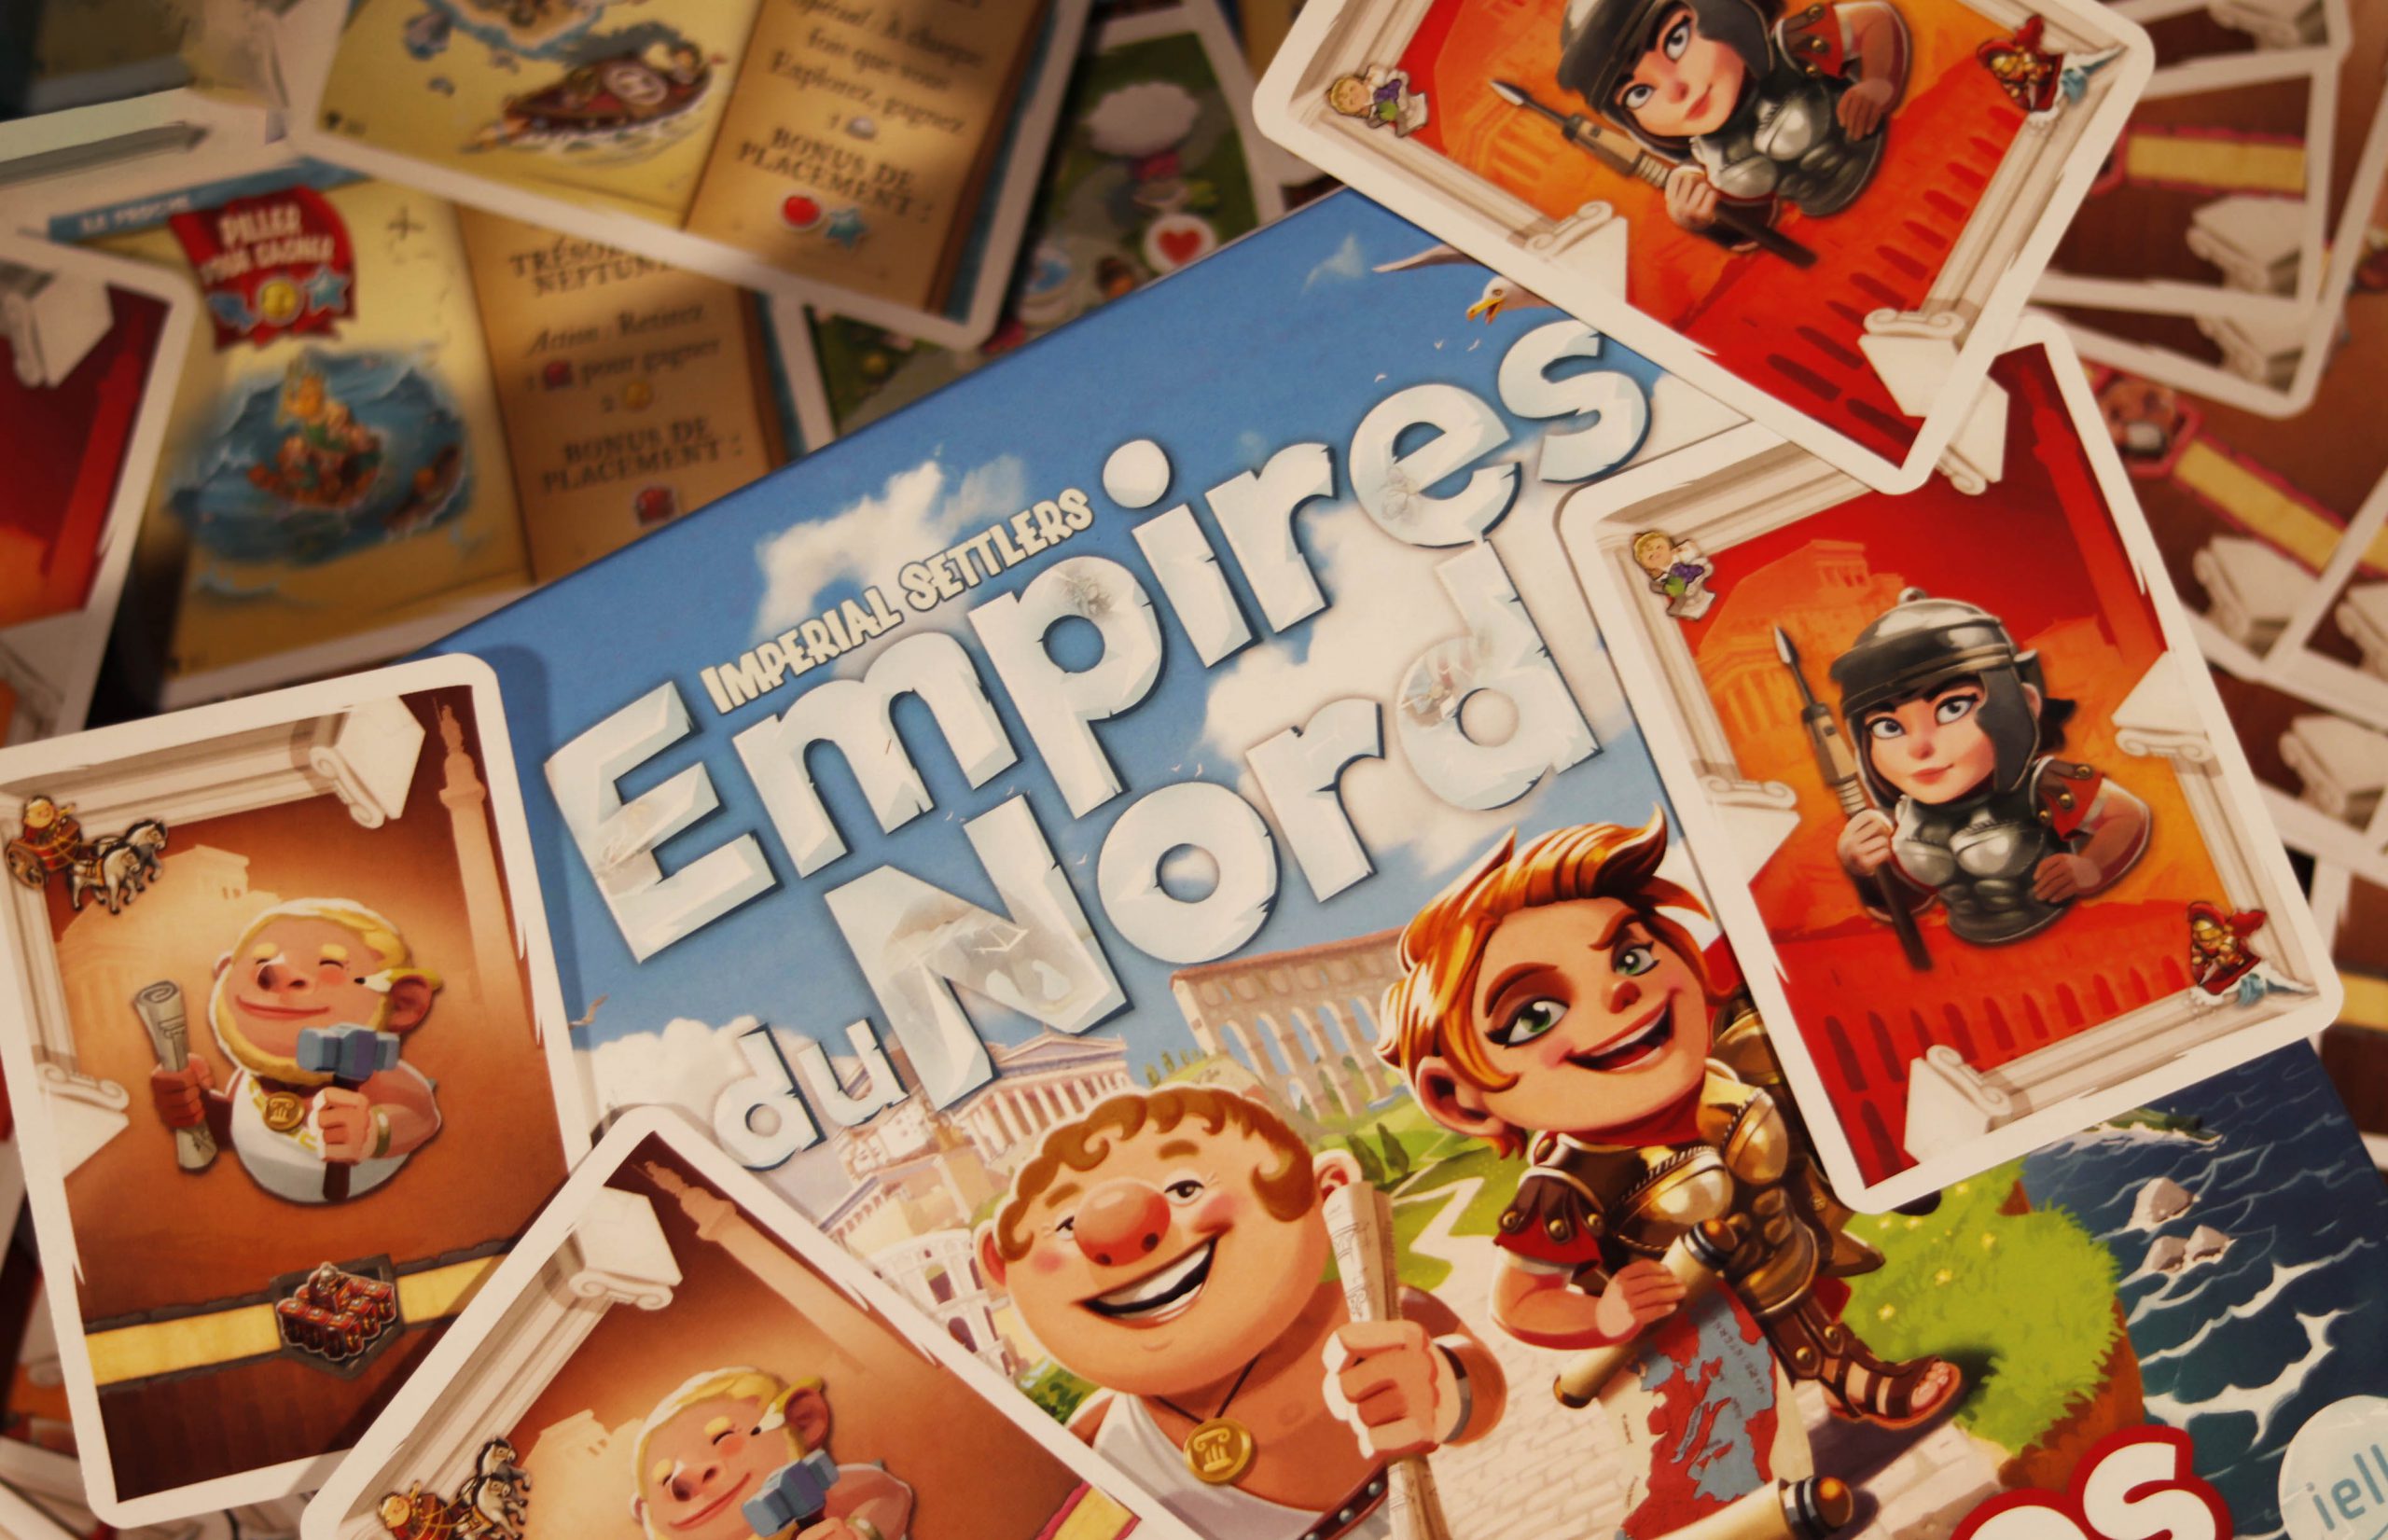 Imperial Settlers : Empires du Nord